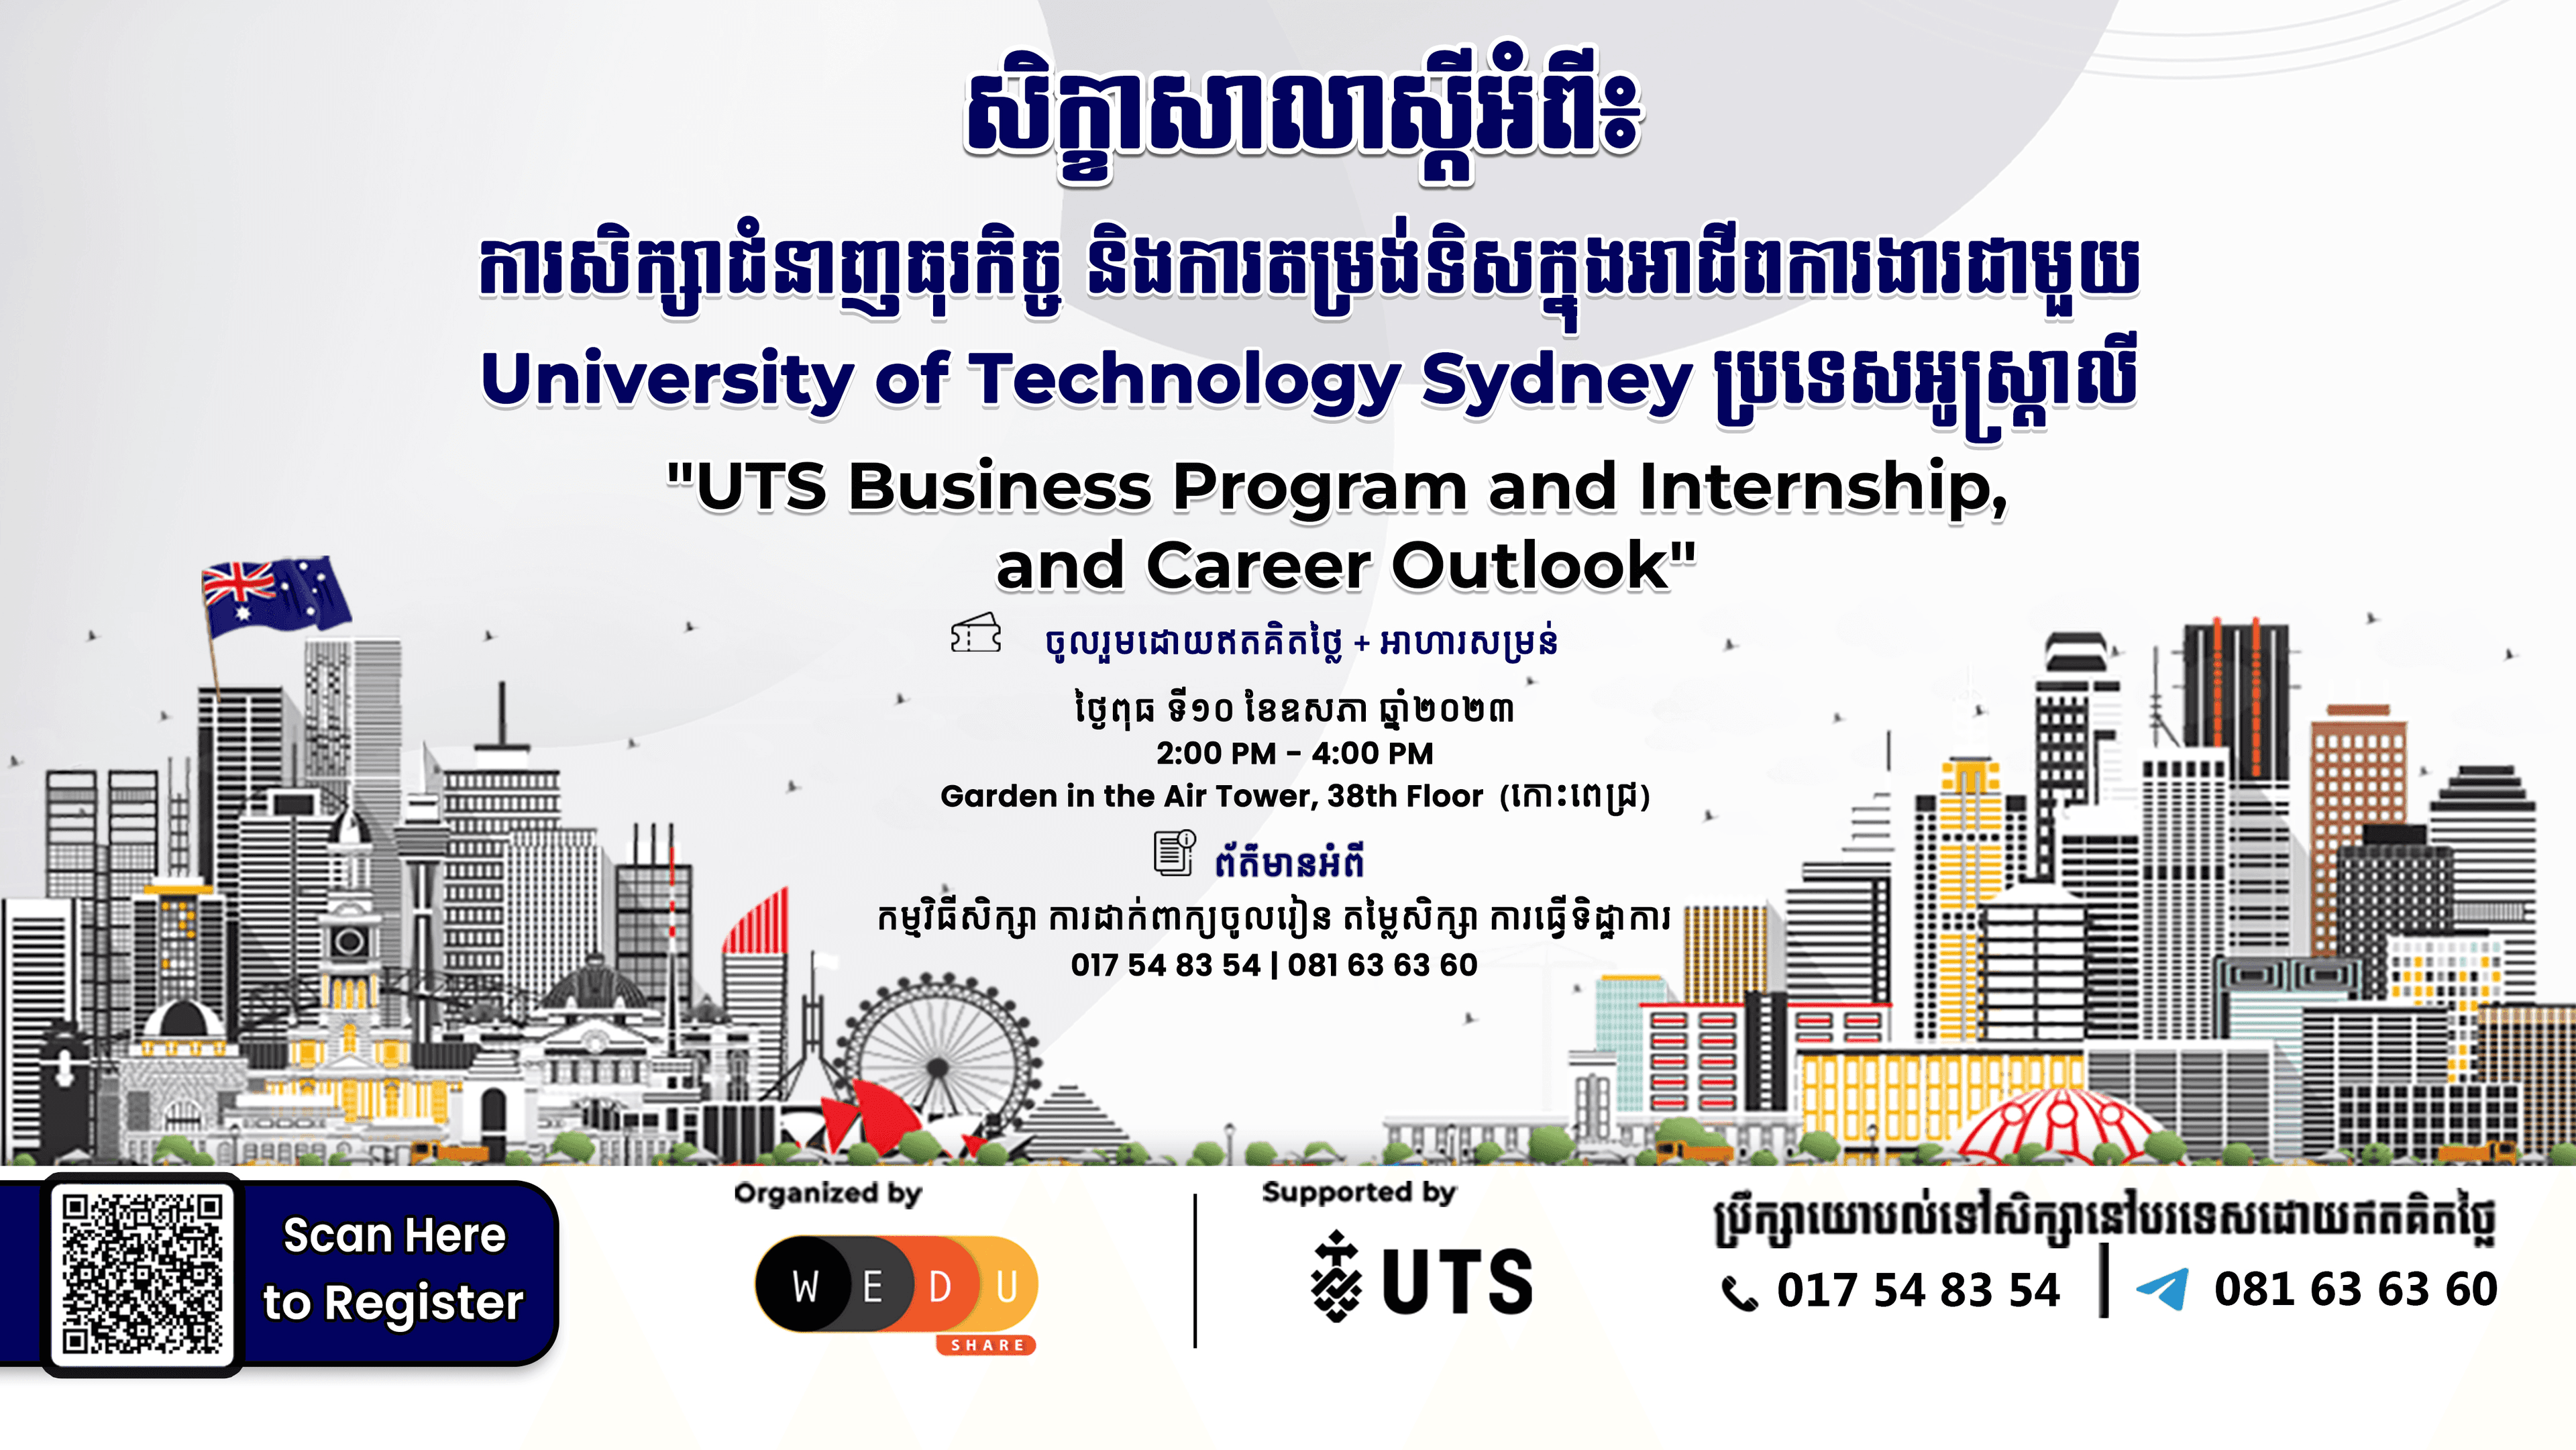 UTS Business Program and Internship and Career Outlook - Workshop